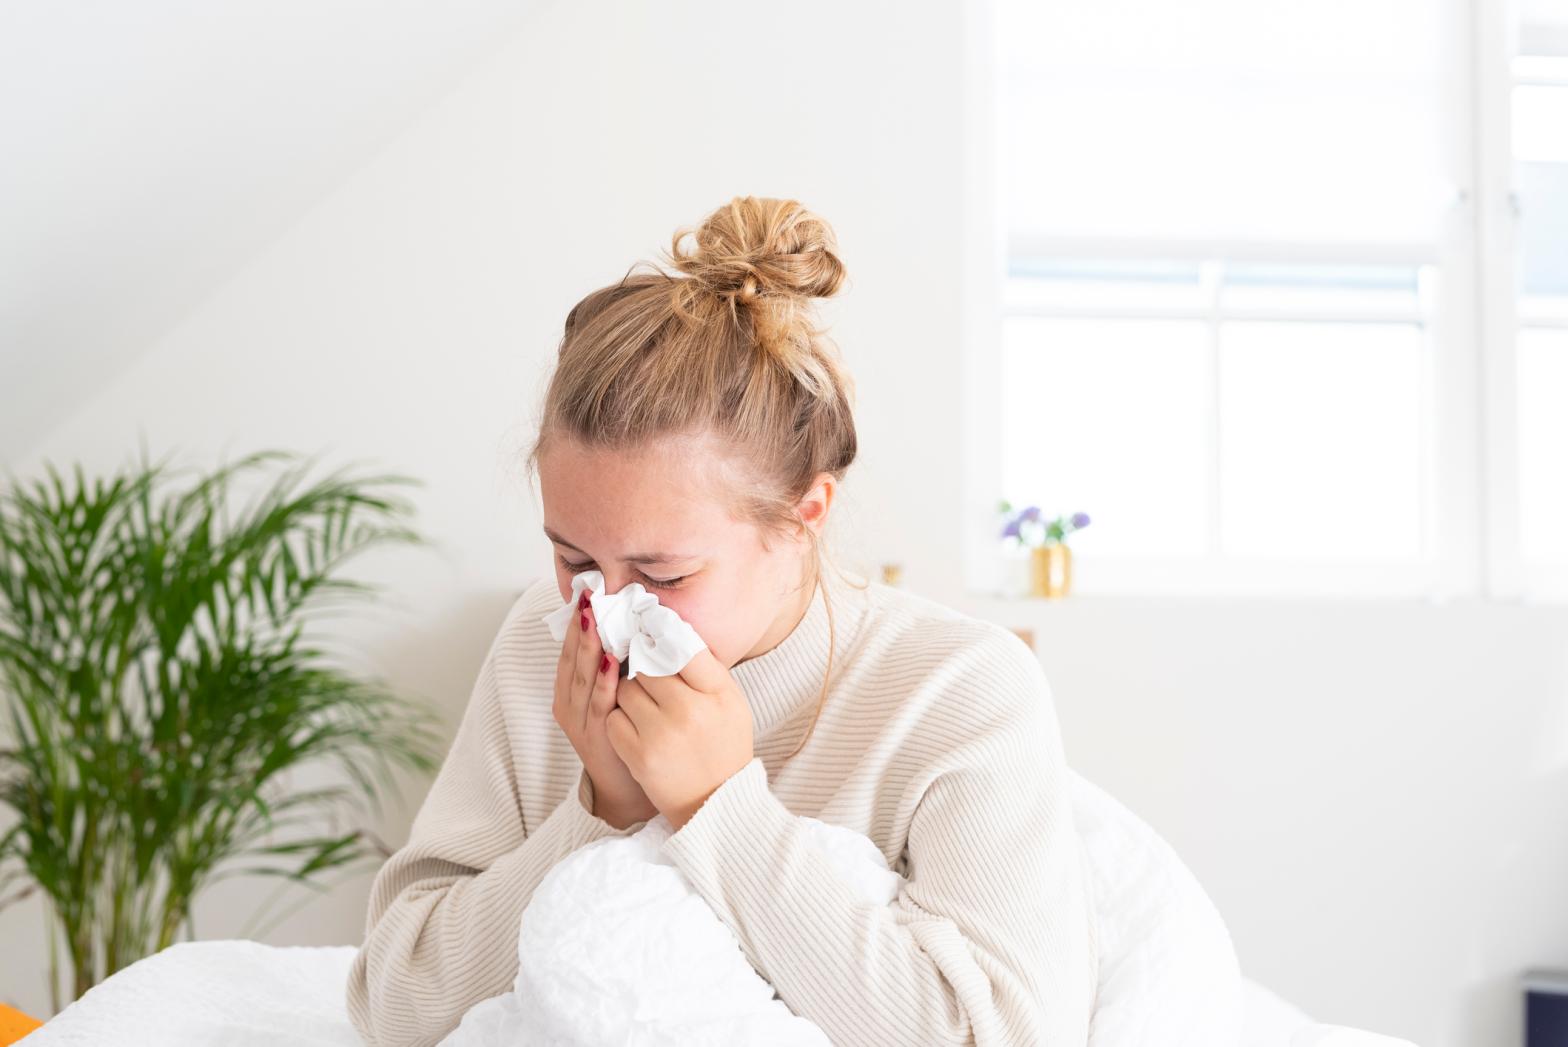 flu season myths debunked